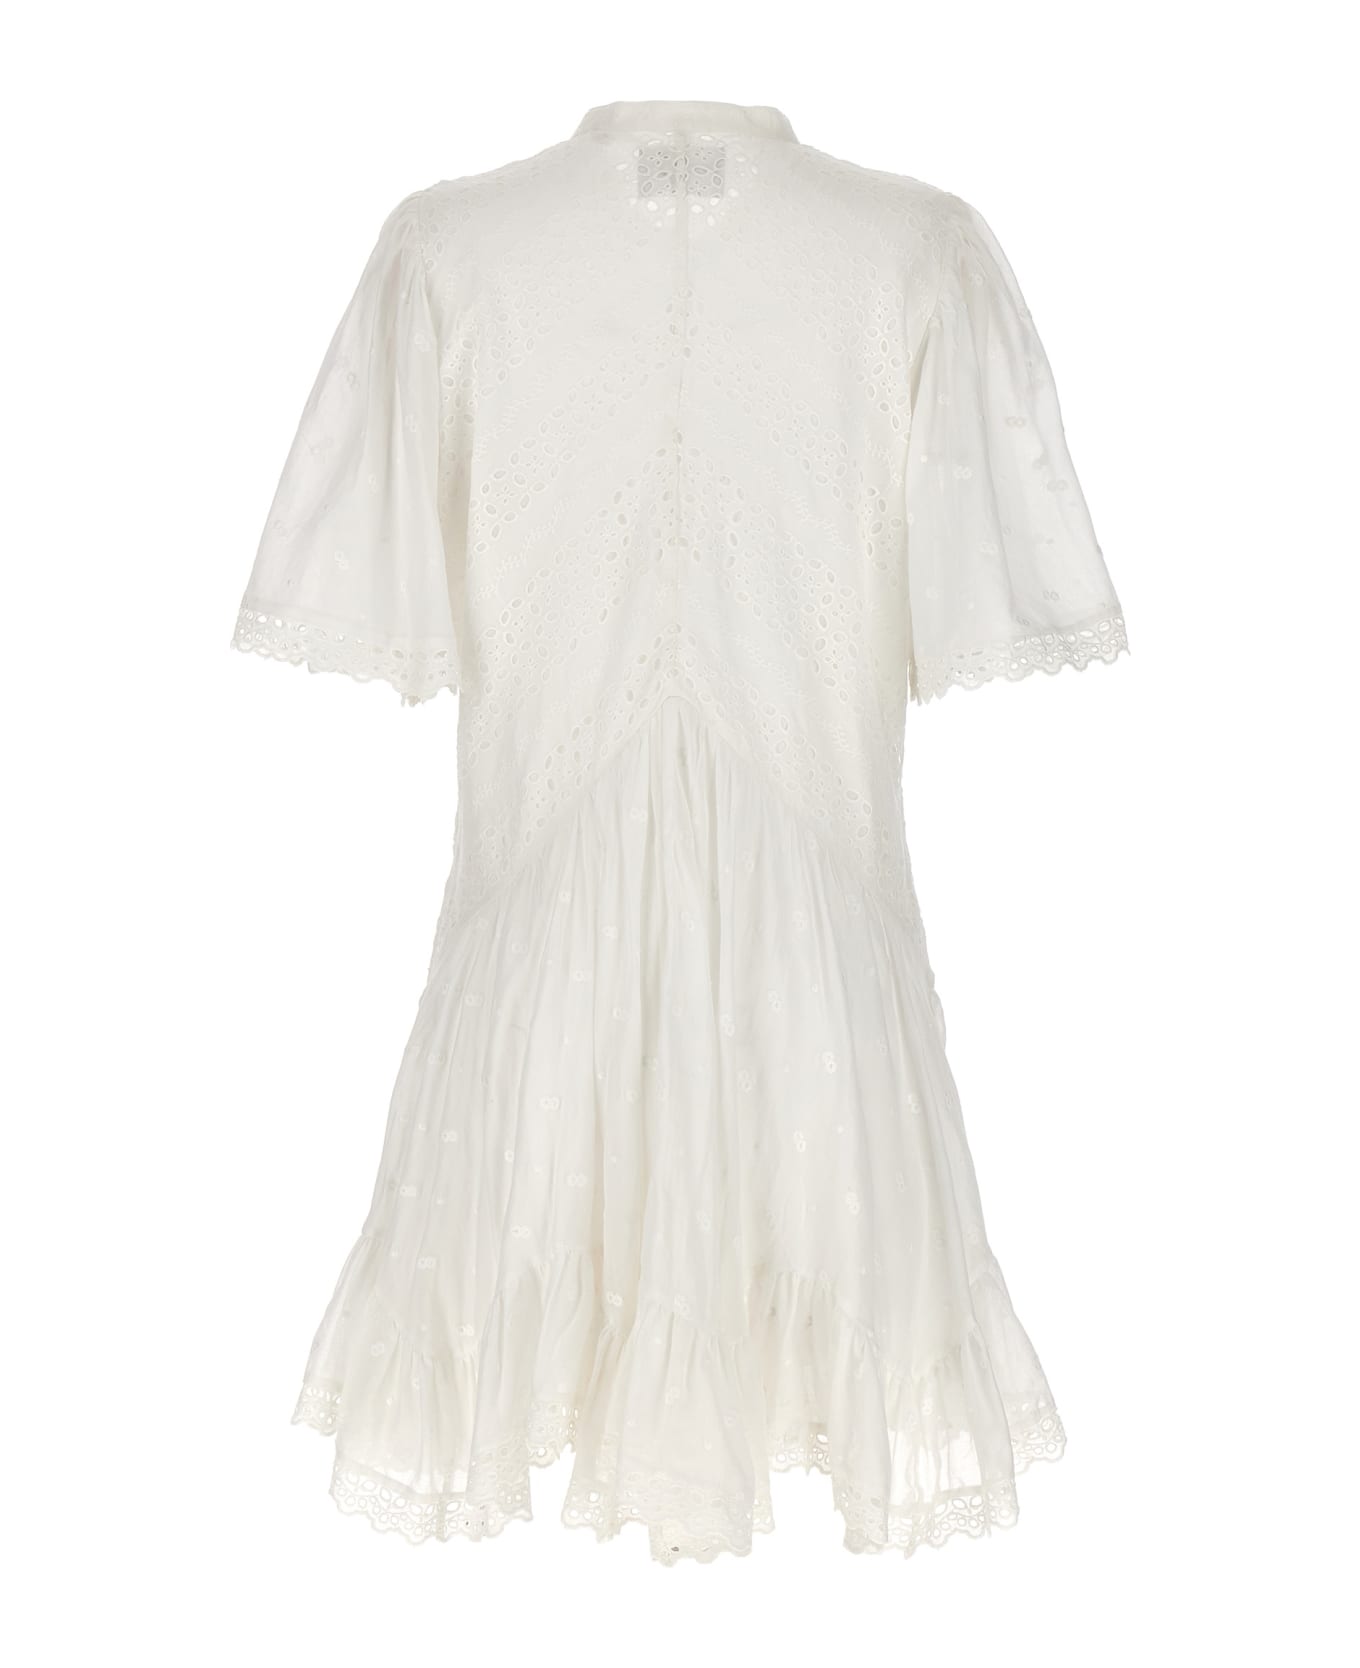 Marant Étoile 'slayae' Dress - Wh White